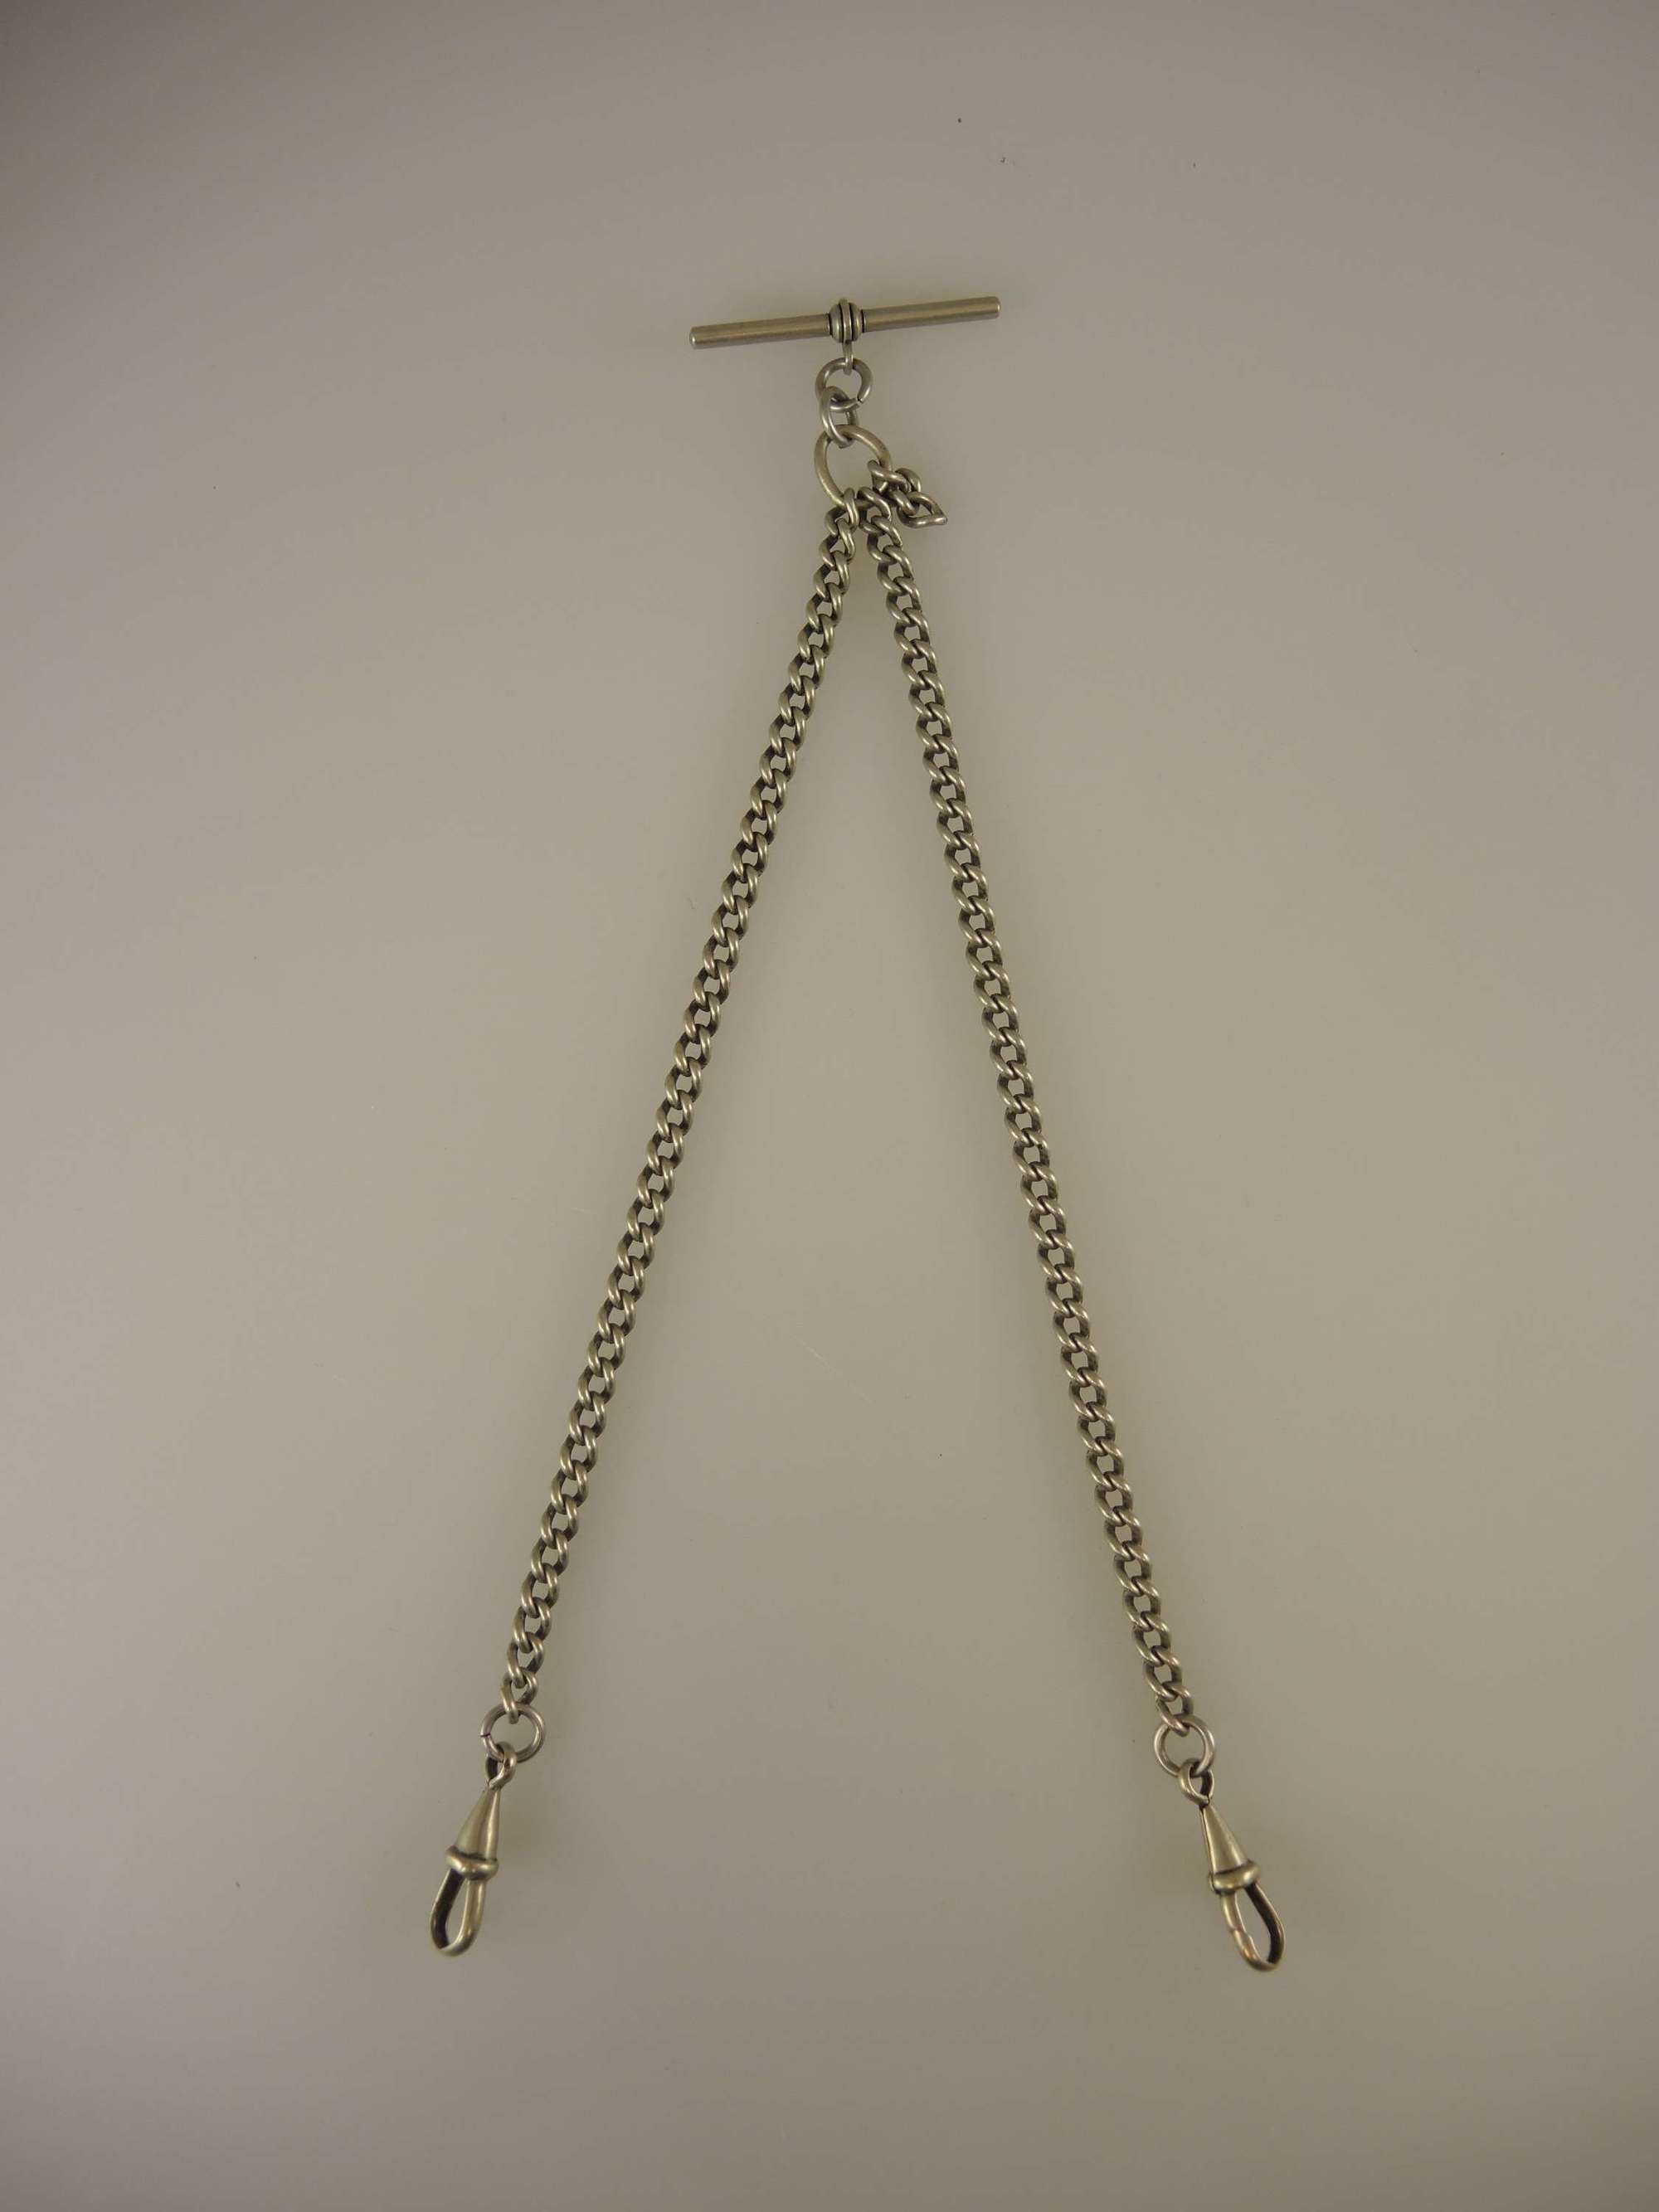 Victorian double pocket watch chain c1890